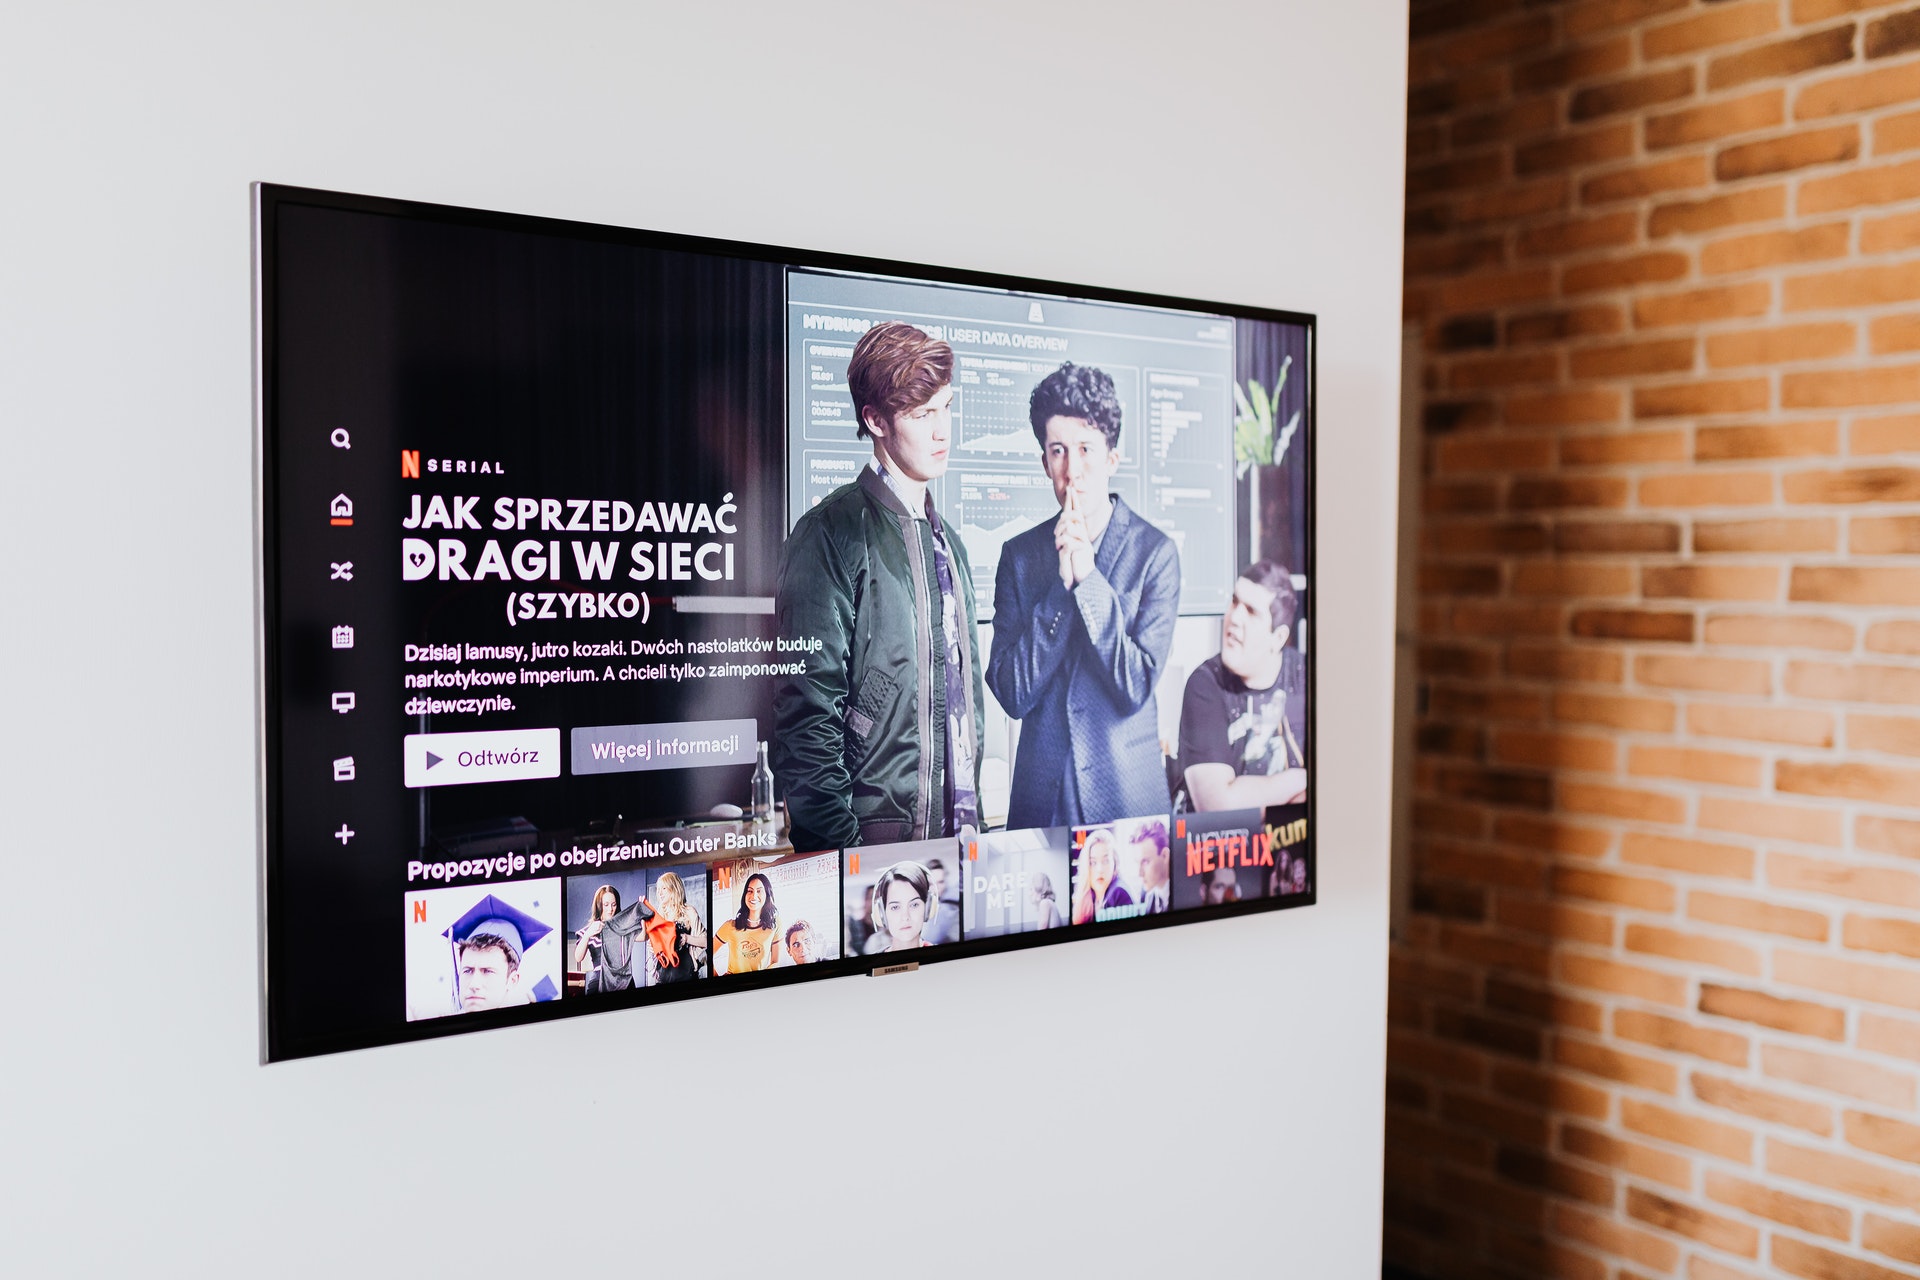 Netflix Platform open on a Smart TV with the show 'Jak sprzedawać dragi w sieci' previewed on it highlighting the Netflix Marketing Strategy to spread across consumer electronics